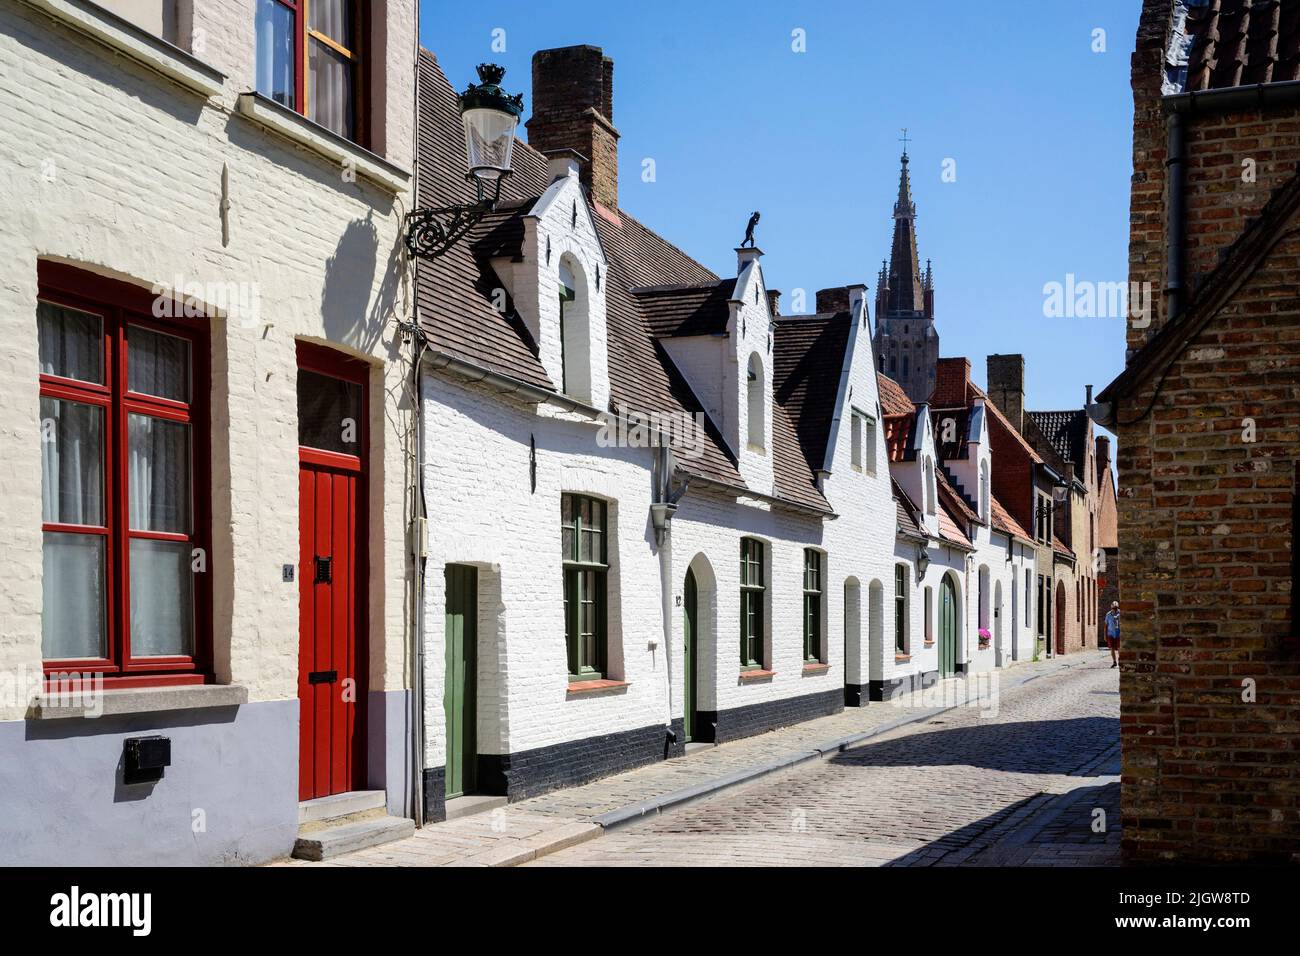 Bruges cityscape Stock Photo